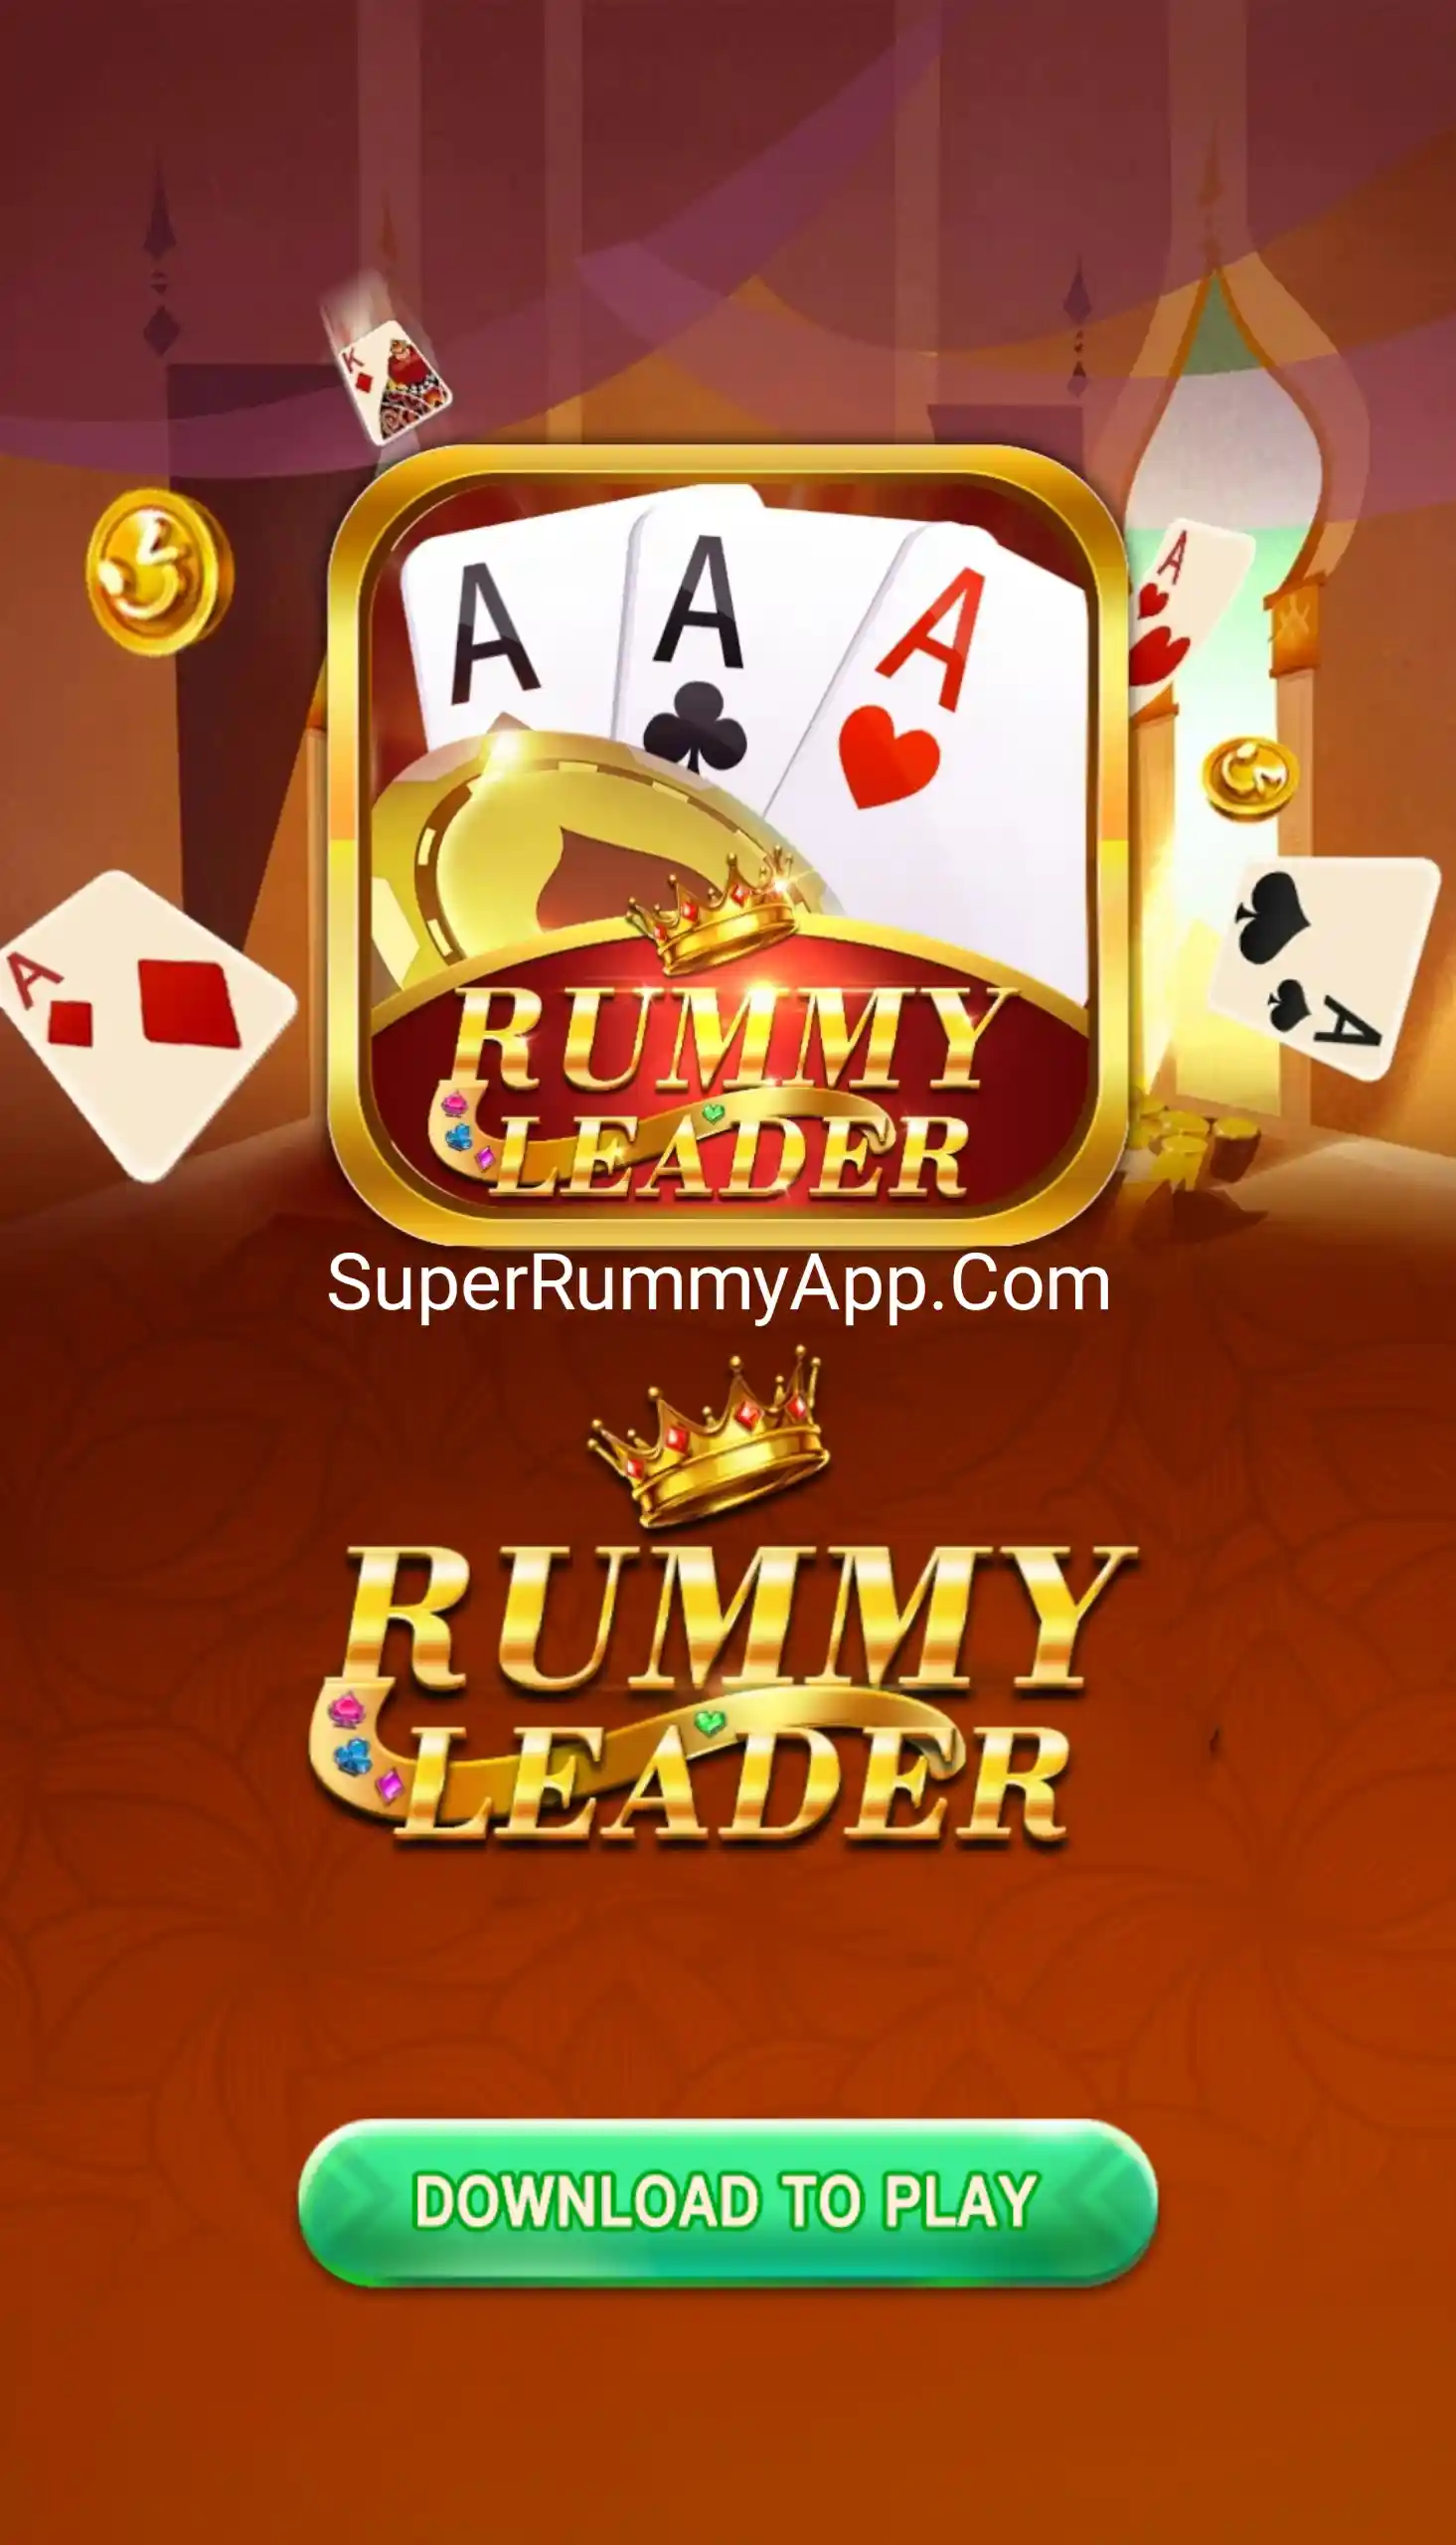 Rummy Leader Apk Download - Super Rummy App